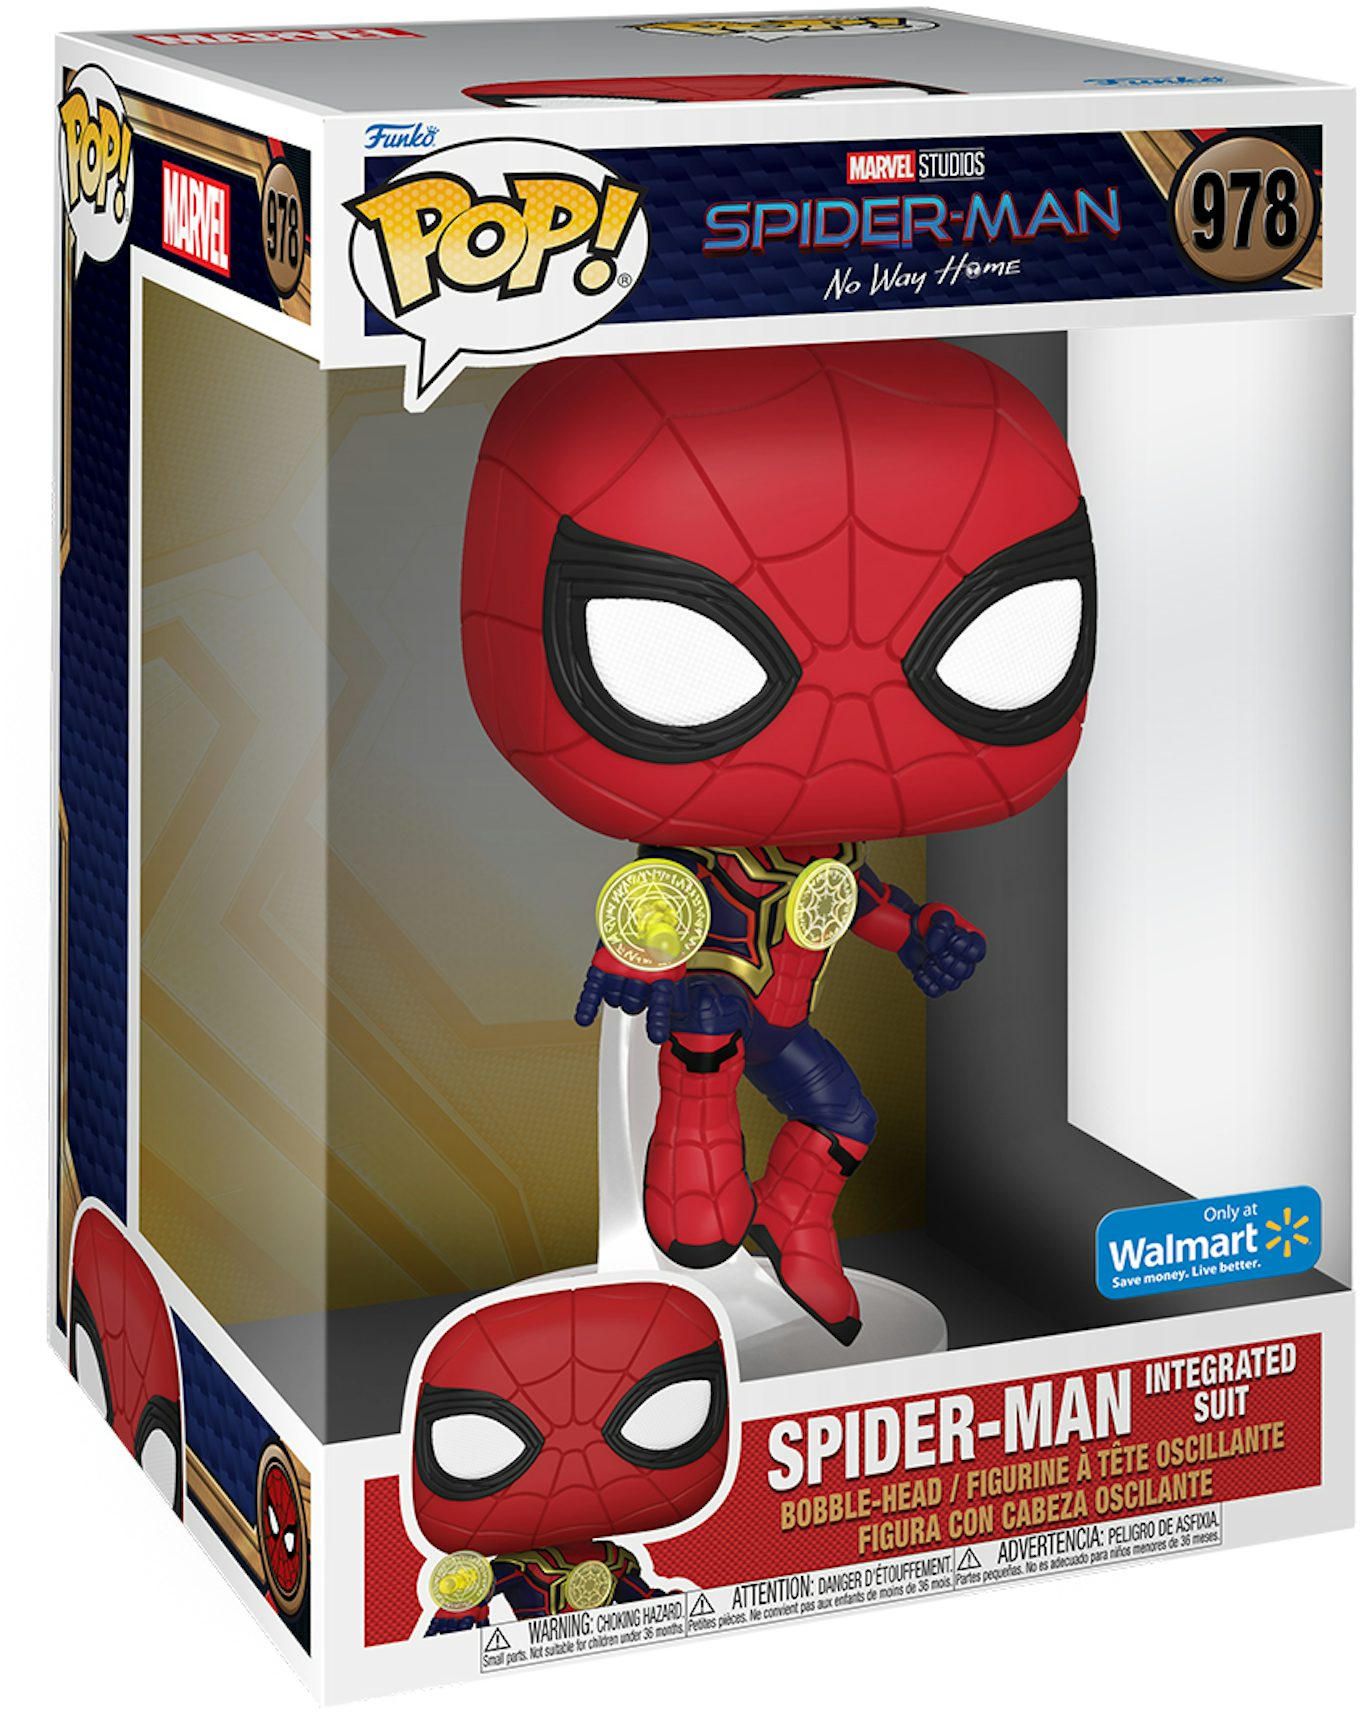 Funko Pop! Marvel Studios Spider-Man No Way Home Spider-Man Integrated Suit  10 Inch Walmart Exclusive Figure #978